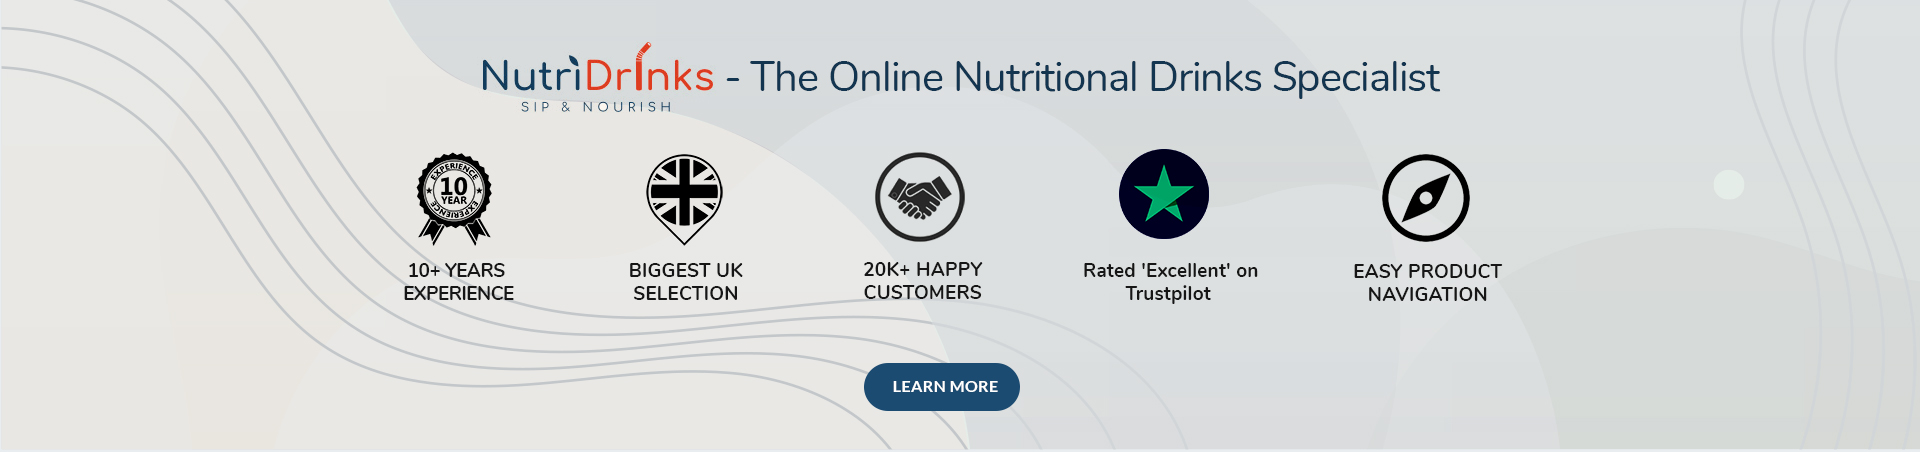 NutriDrinks - The Online Nutritional Drinks Specialist 